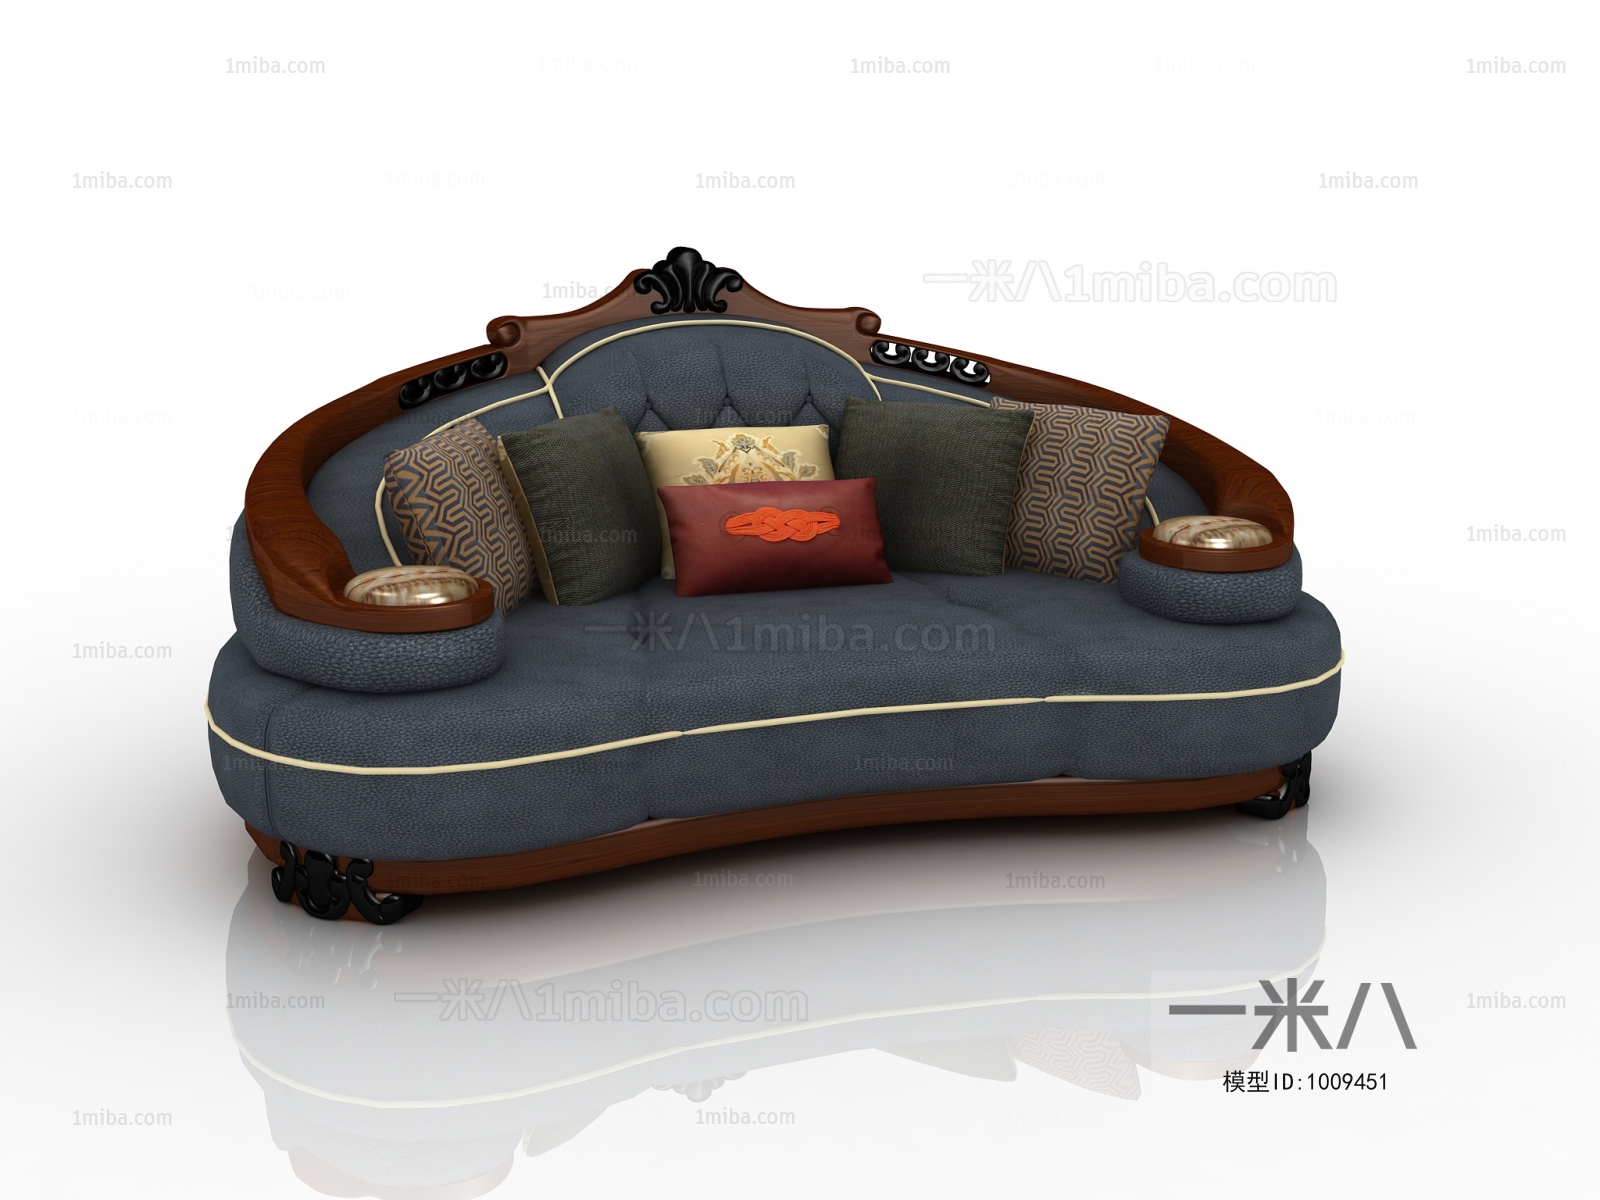 American Style Sofa Combination